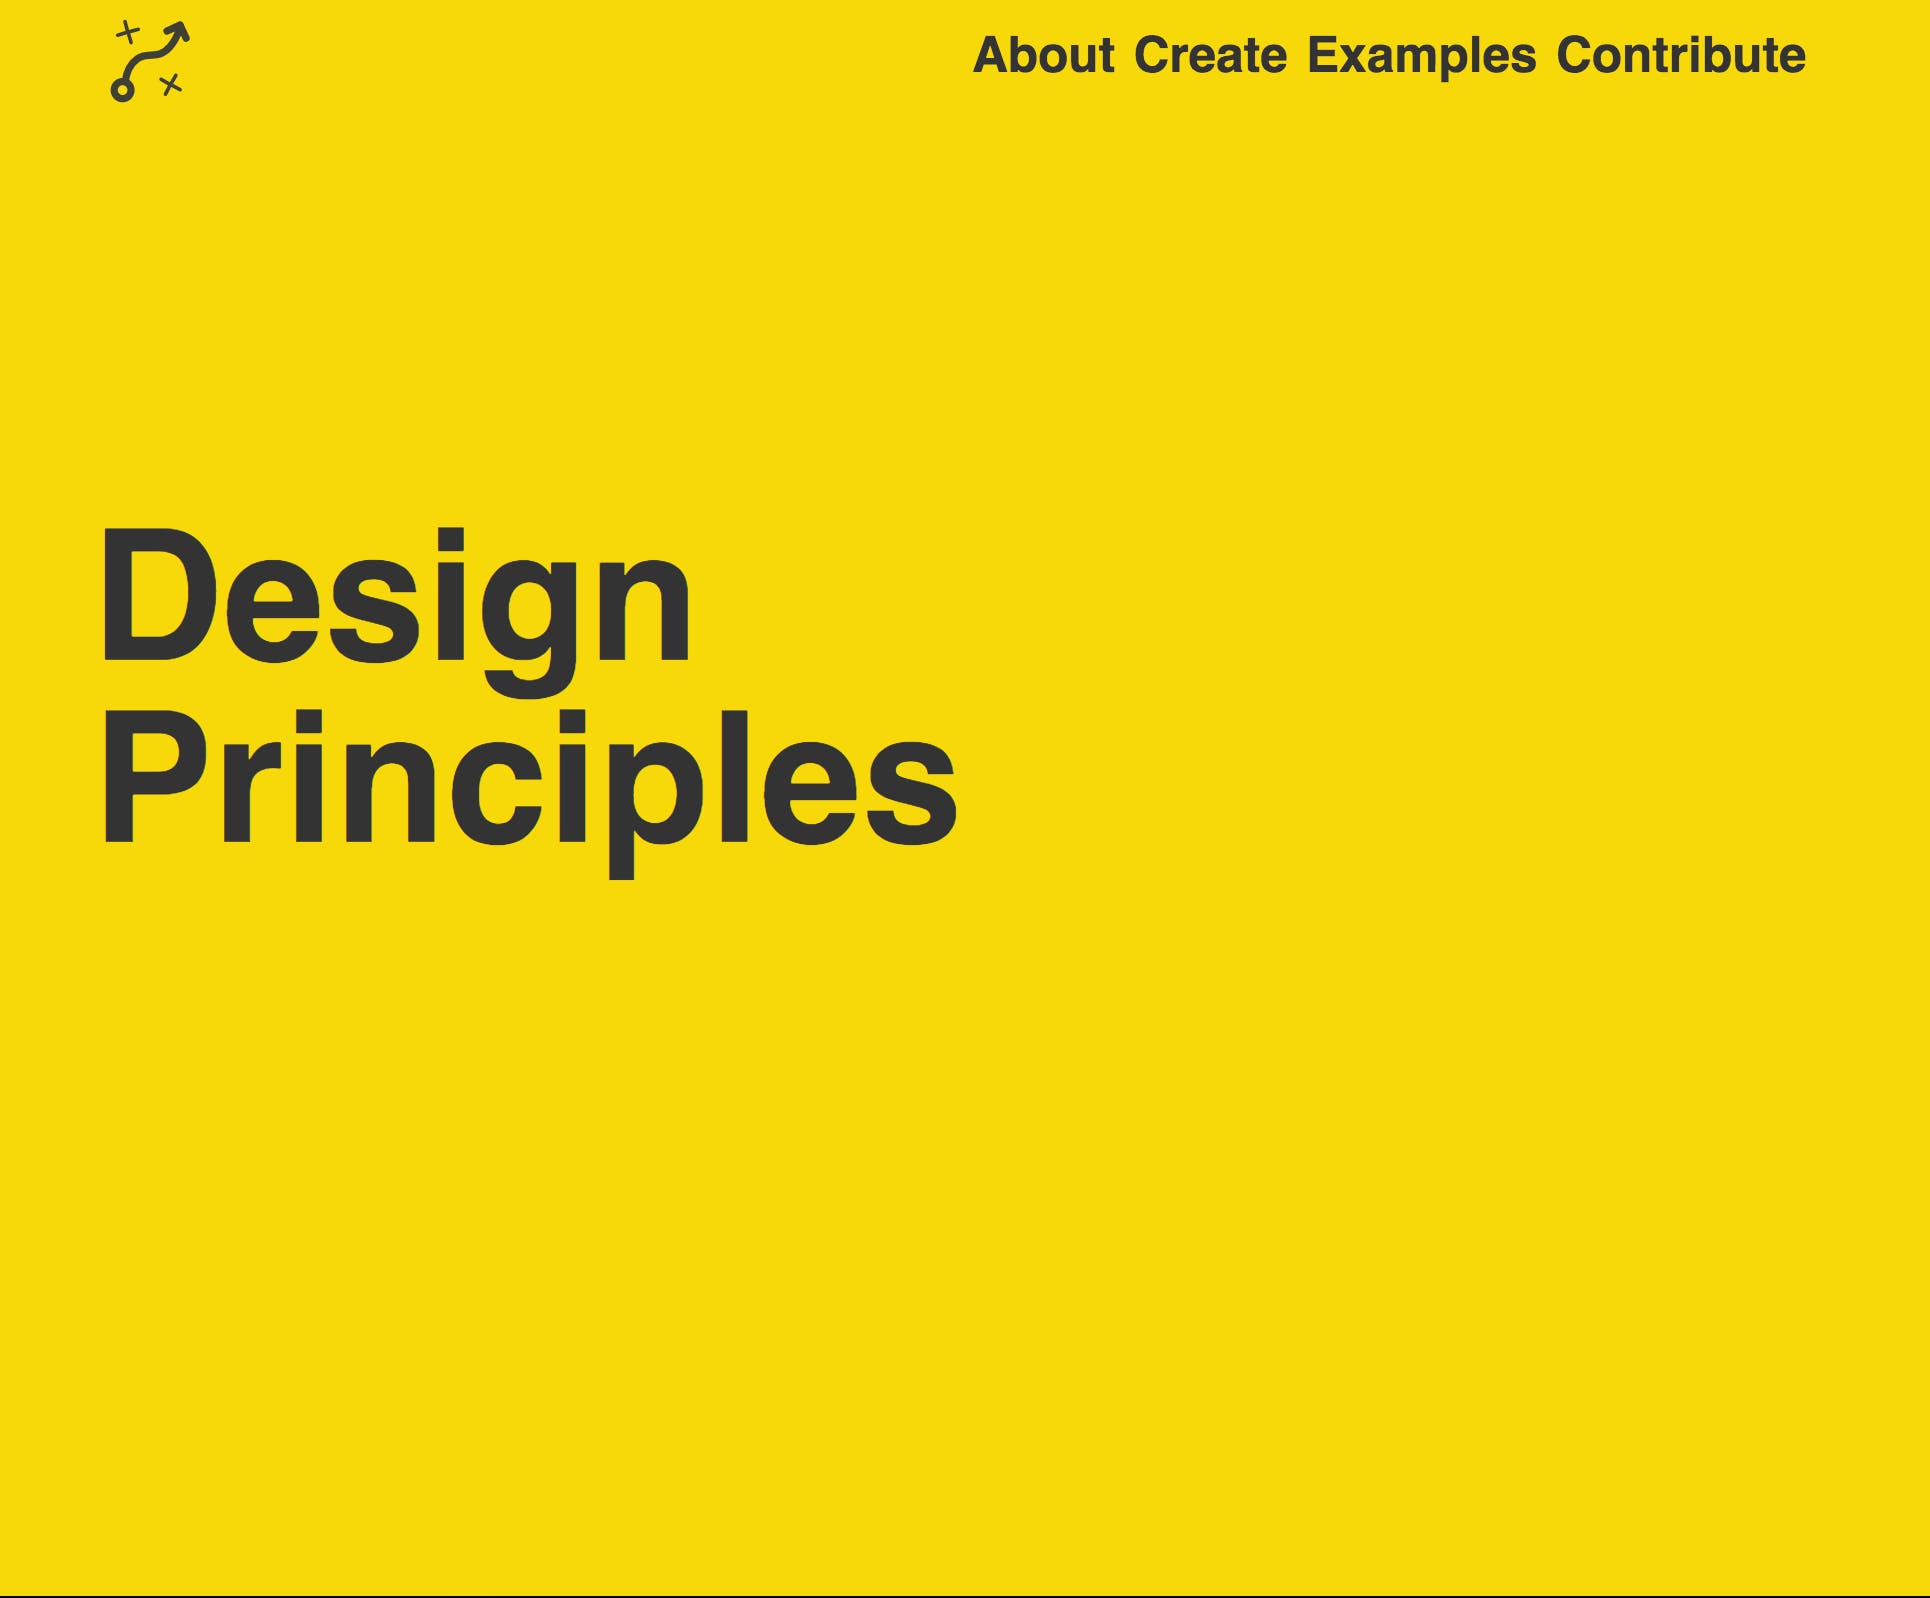 Design Principles media 2